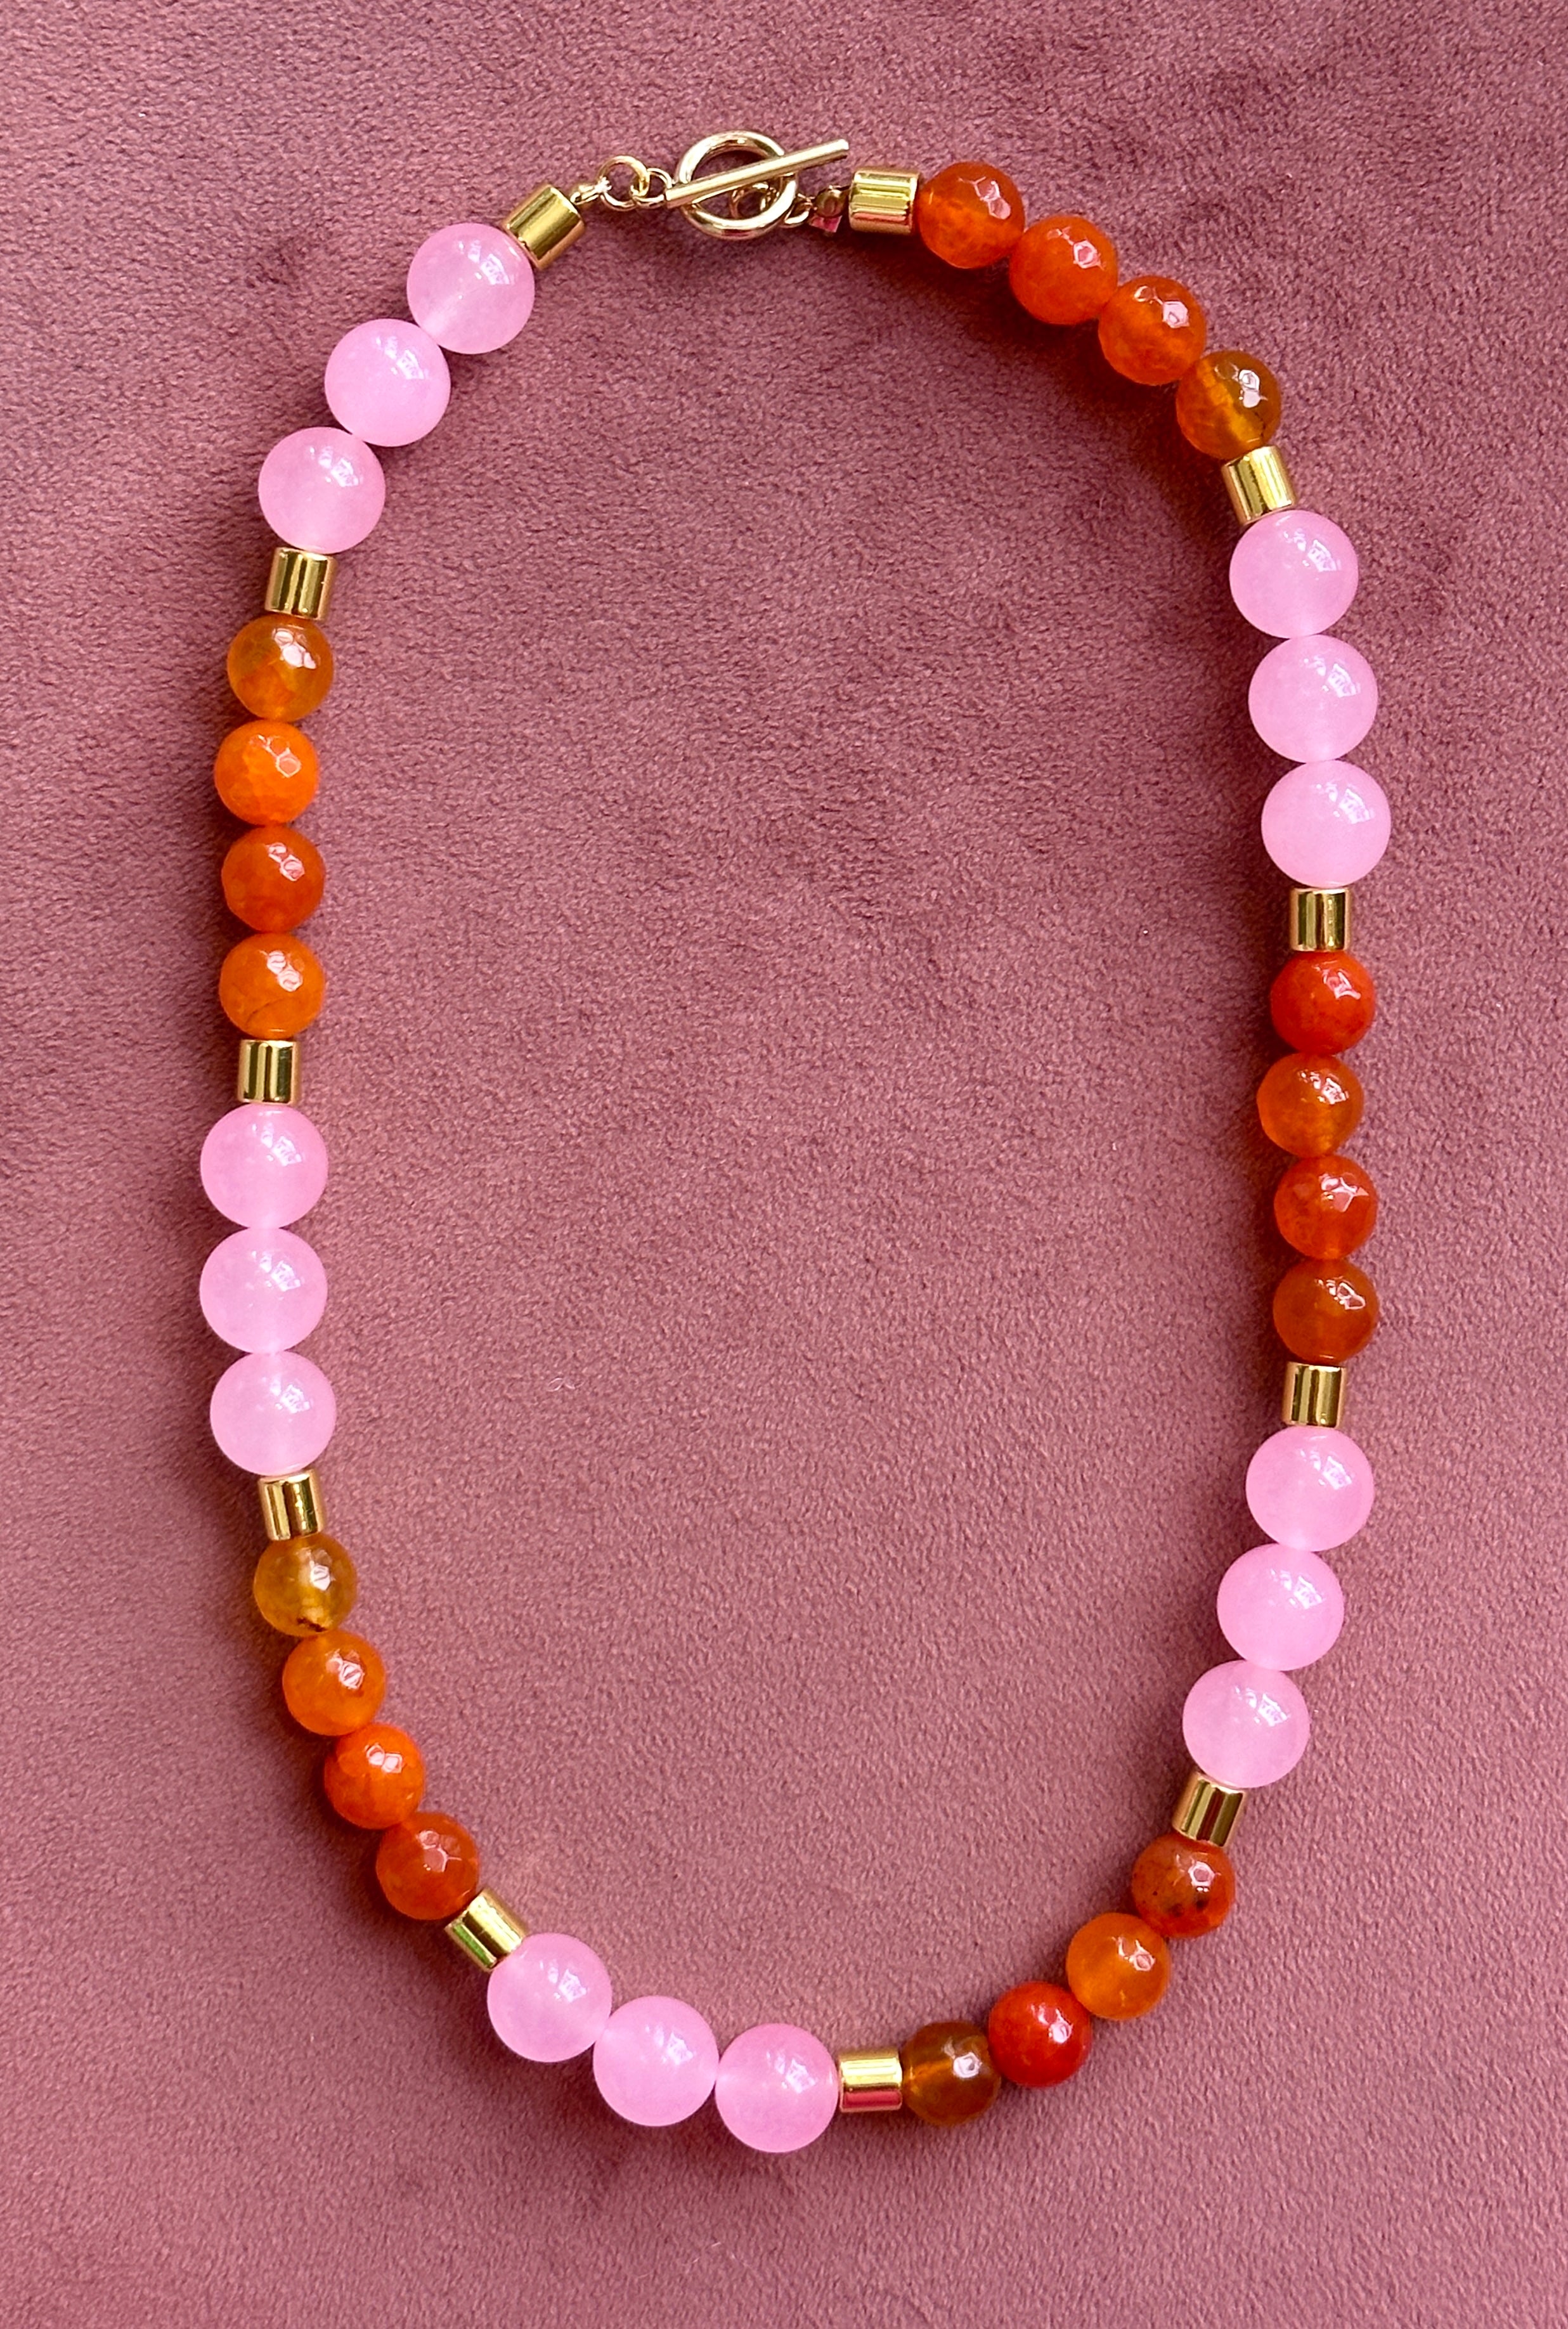 Pink and Orange Gemstone Necklace